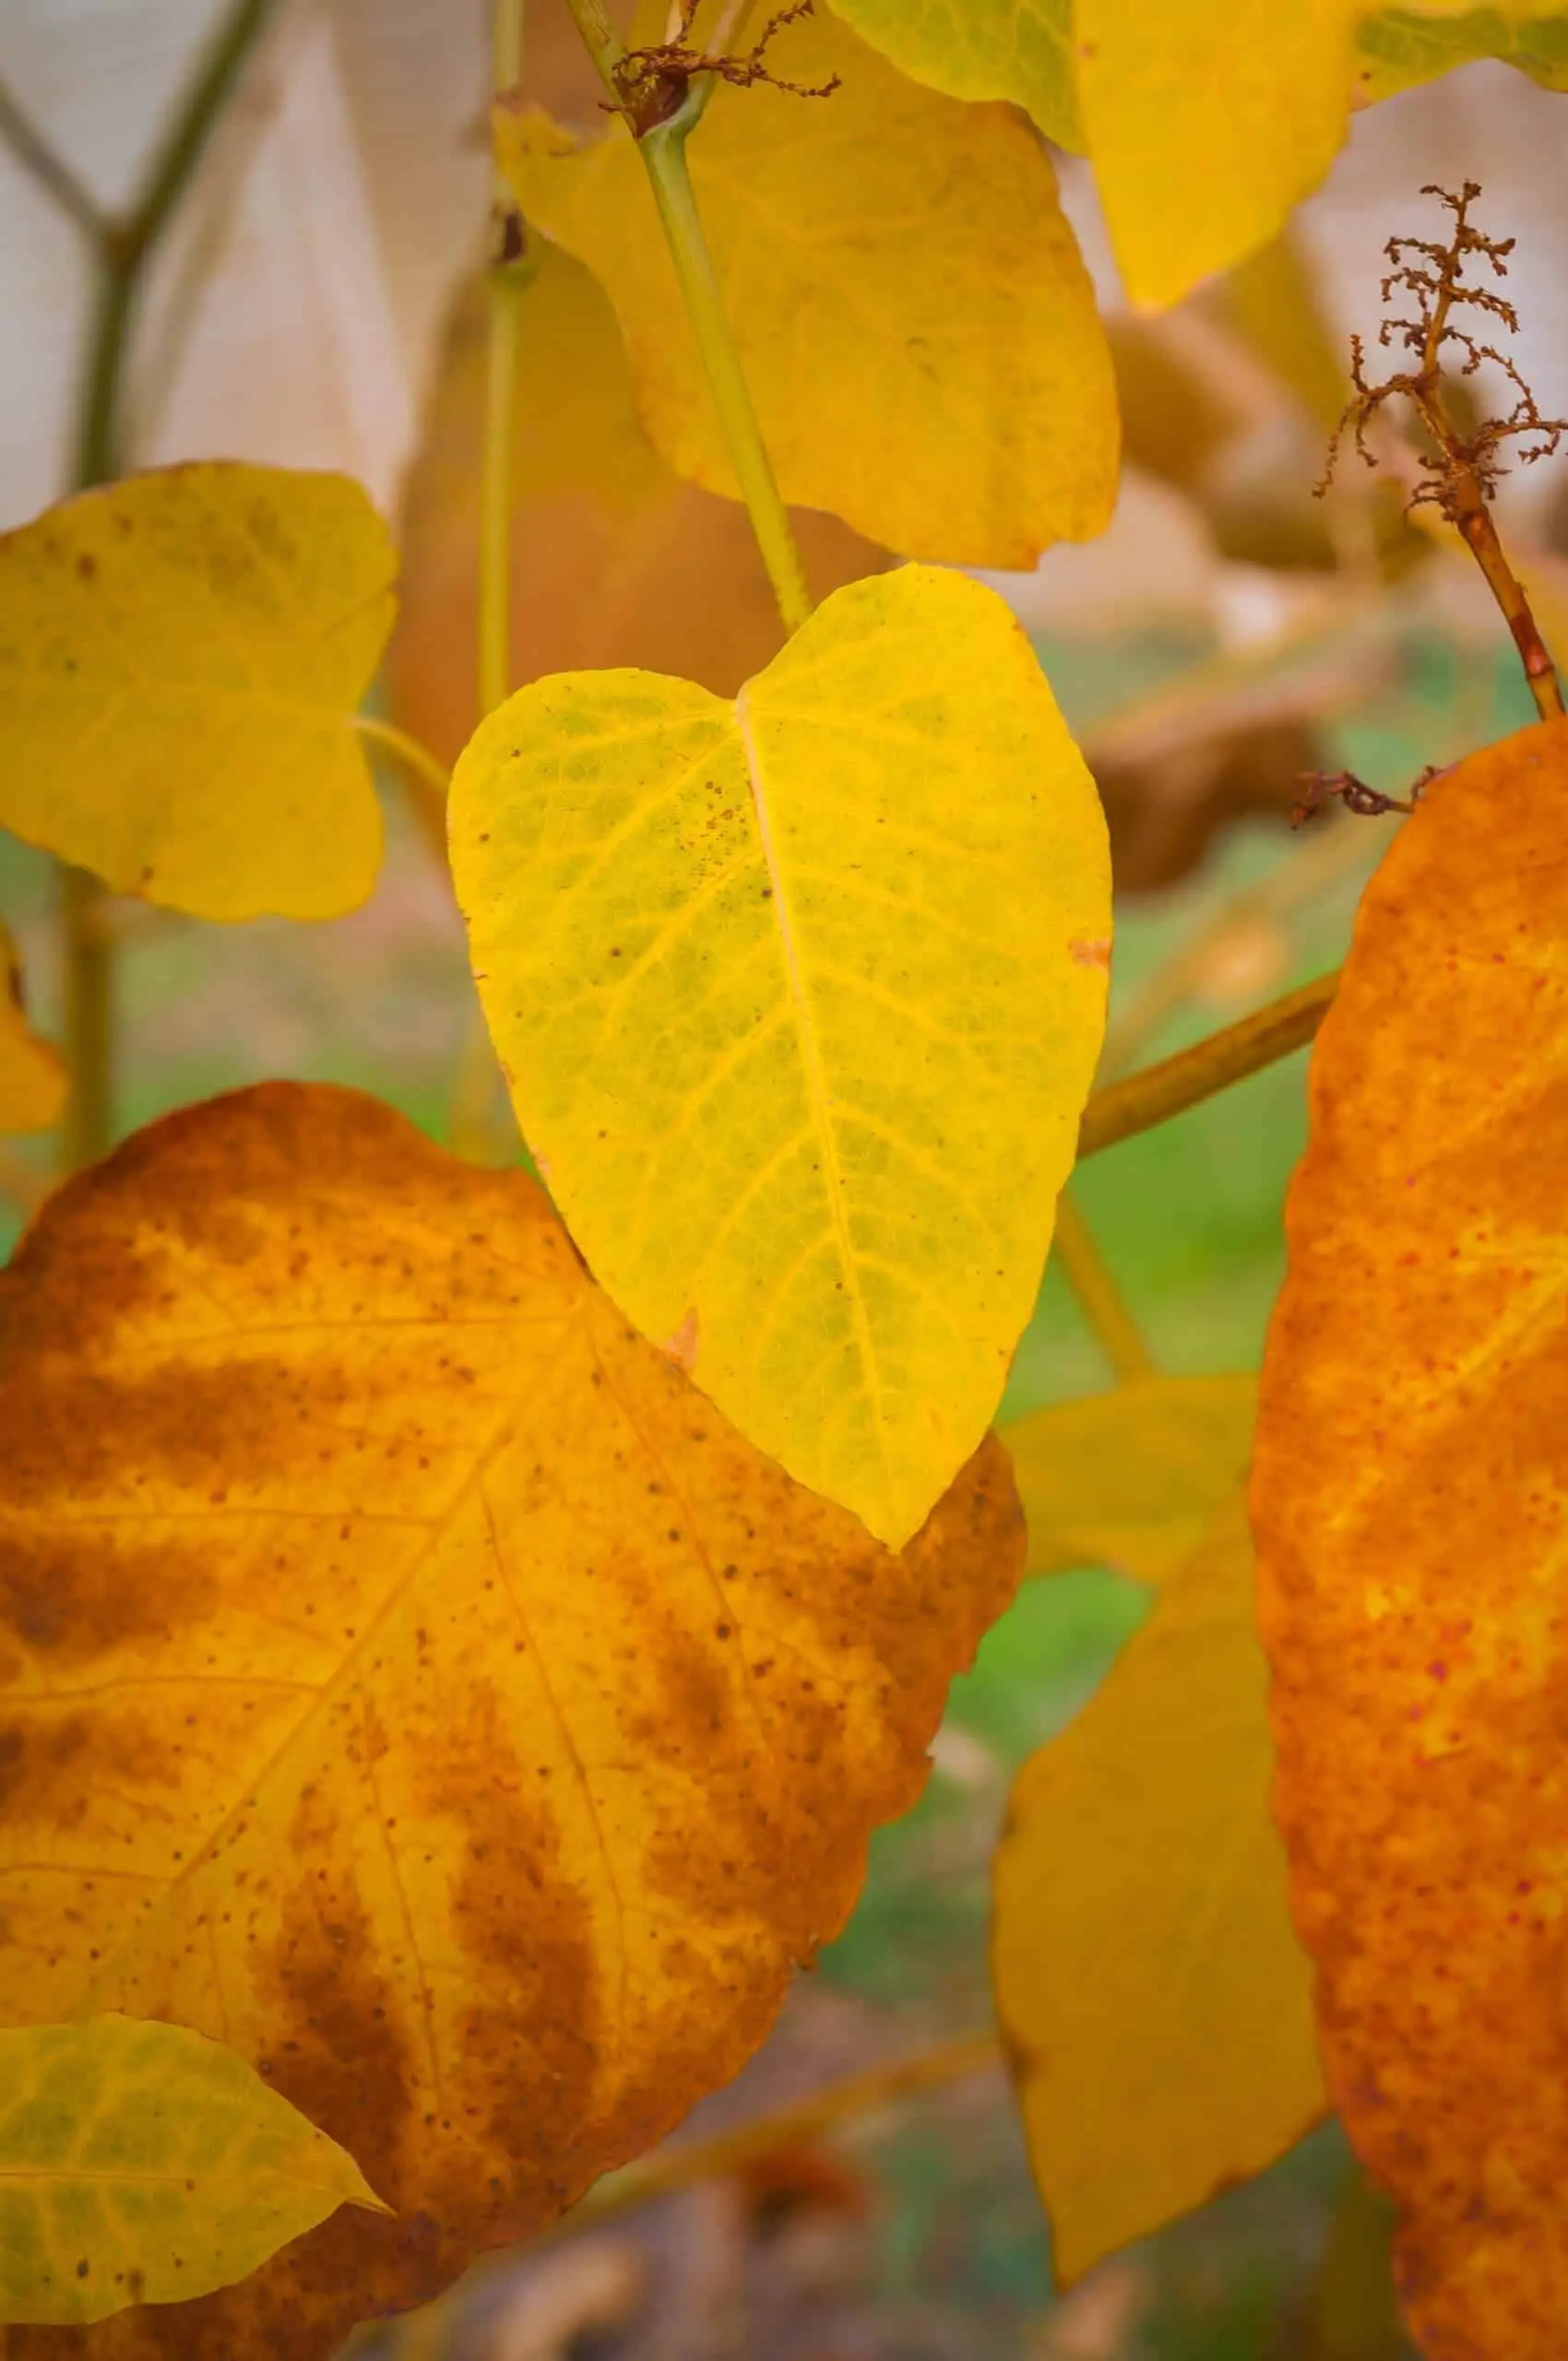 Japanese knotweed leaves die back in the winter turning yellow